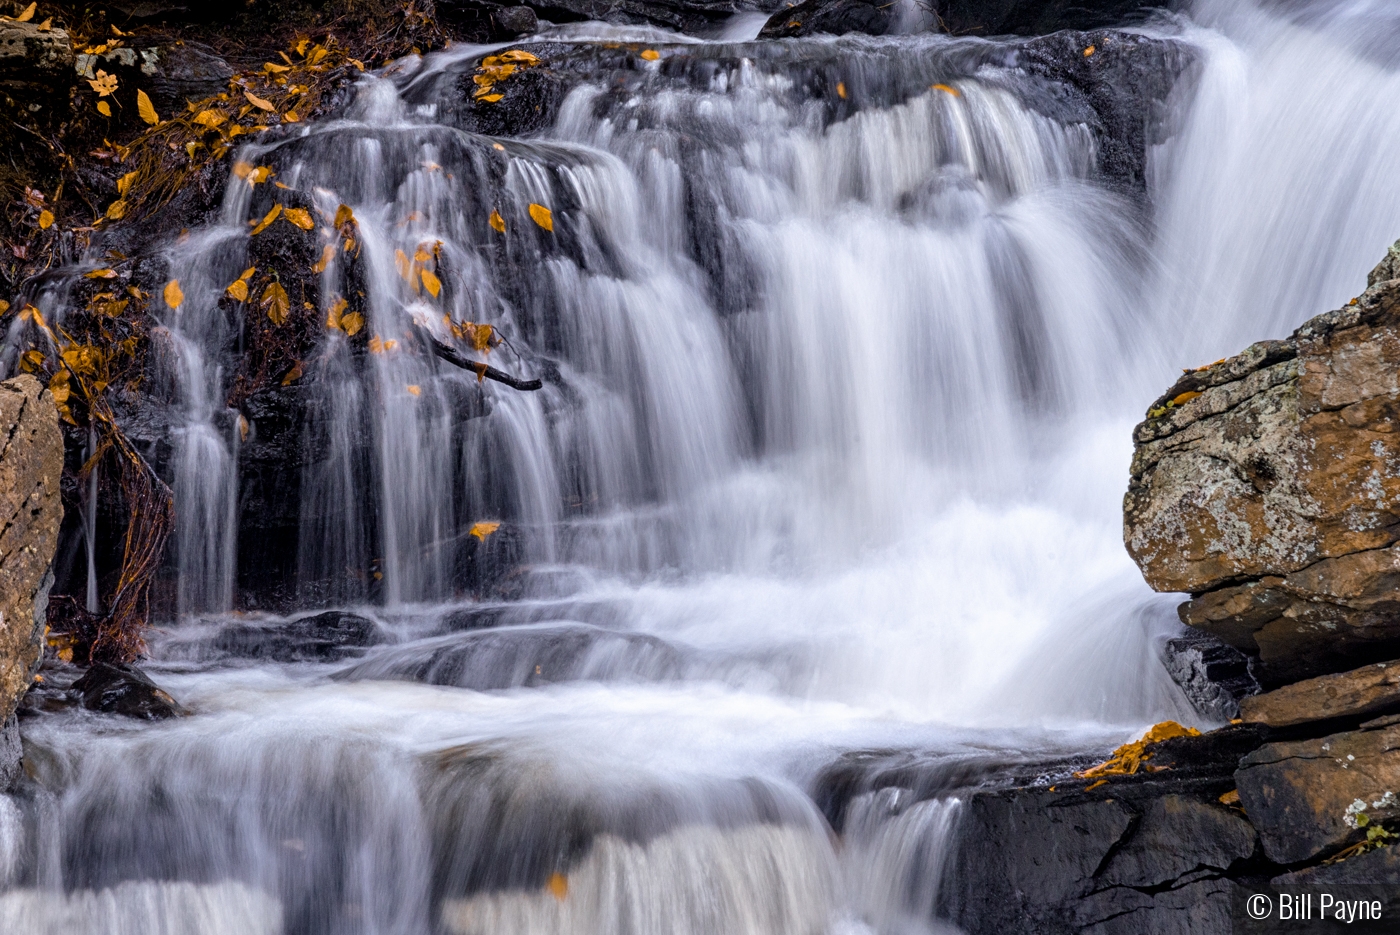 Tartia-Engel Falls in the Fall by Bill Payne